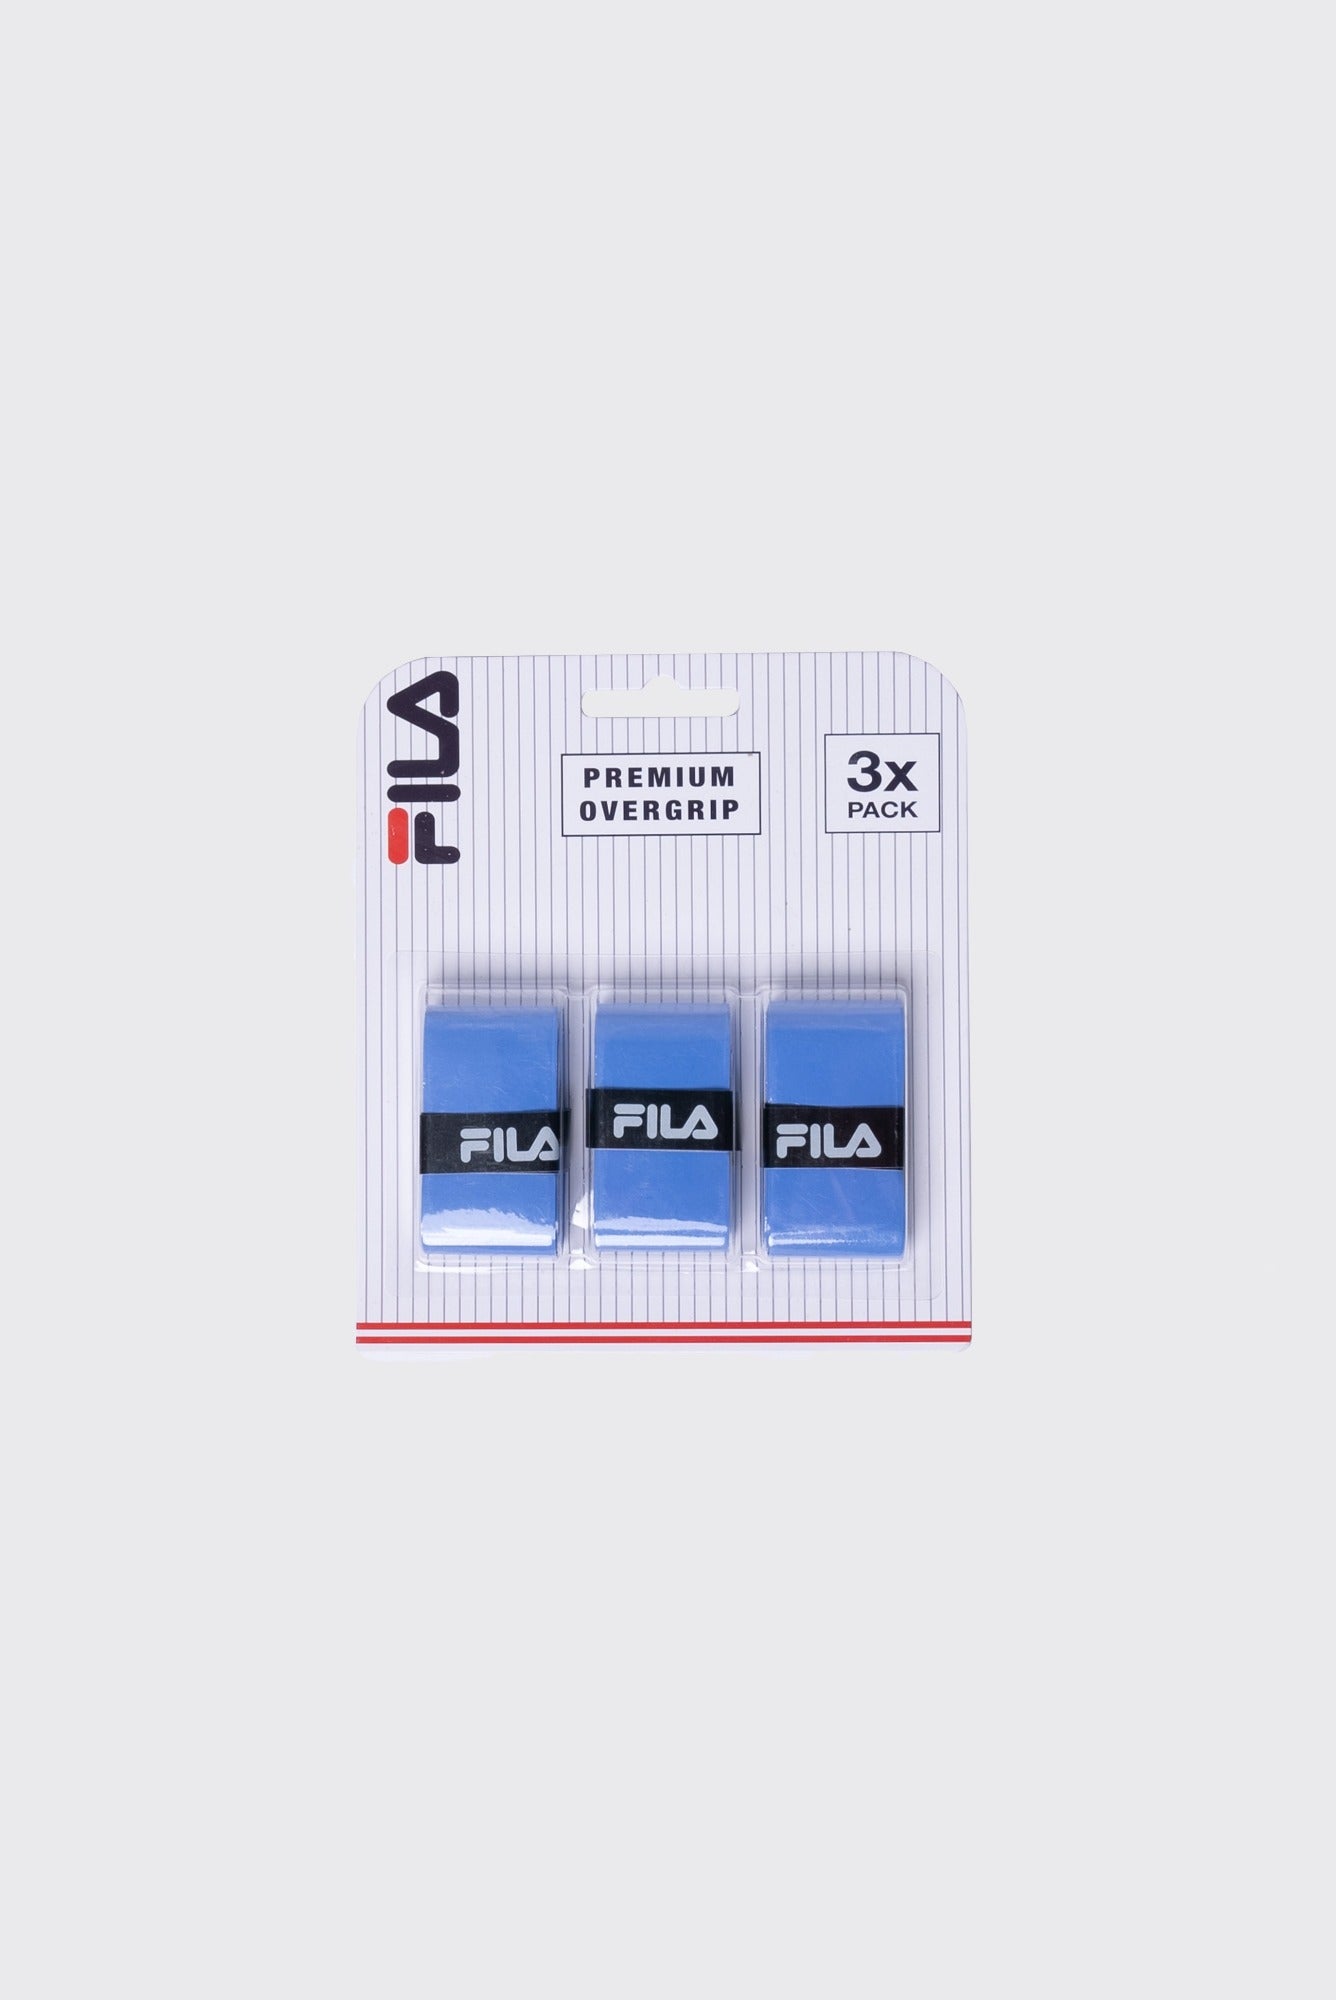 FILA Premium Overgrip T500A 3 Pack